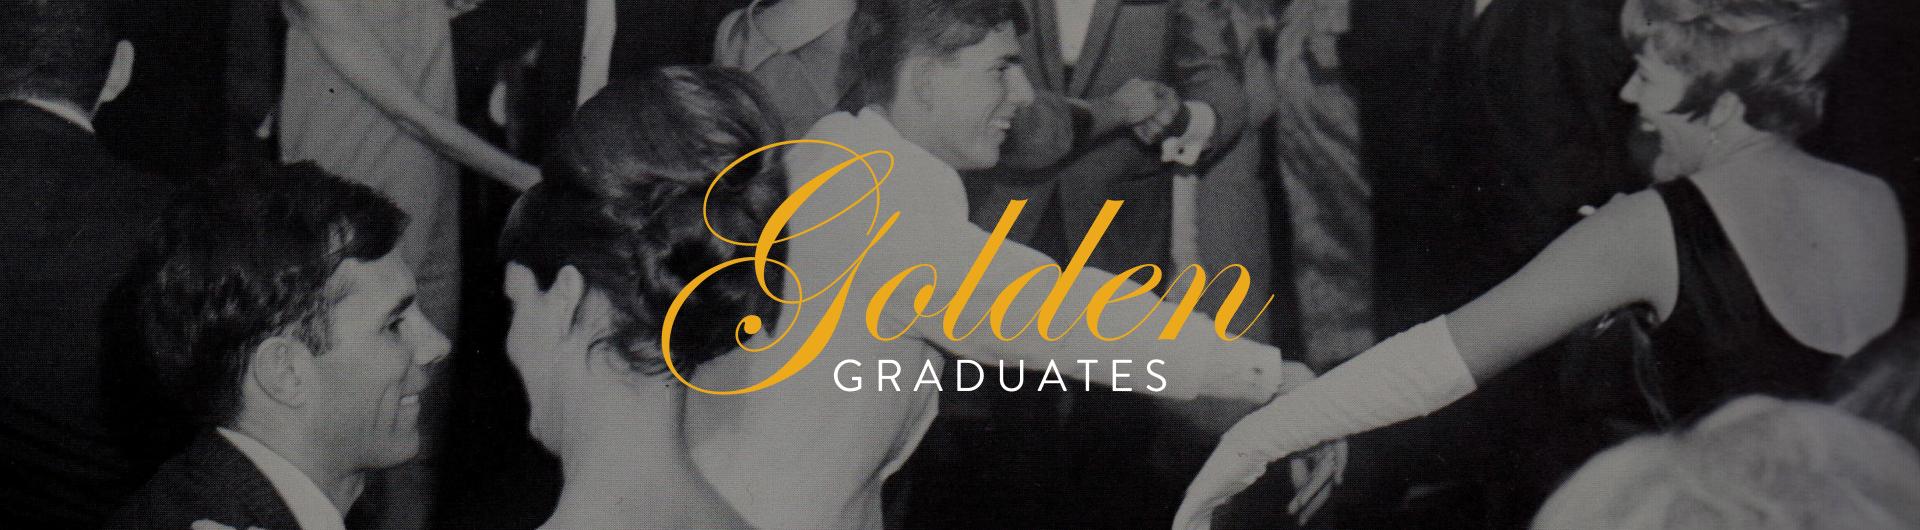 Golden Graduates Banner